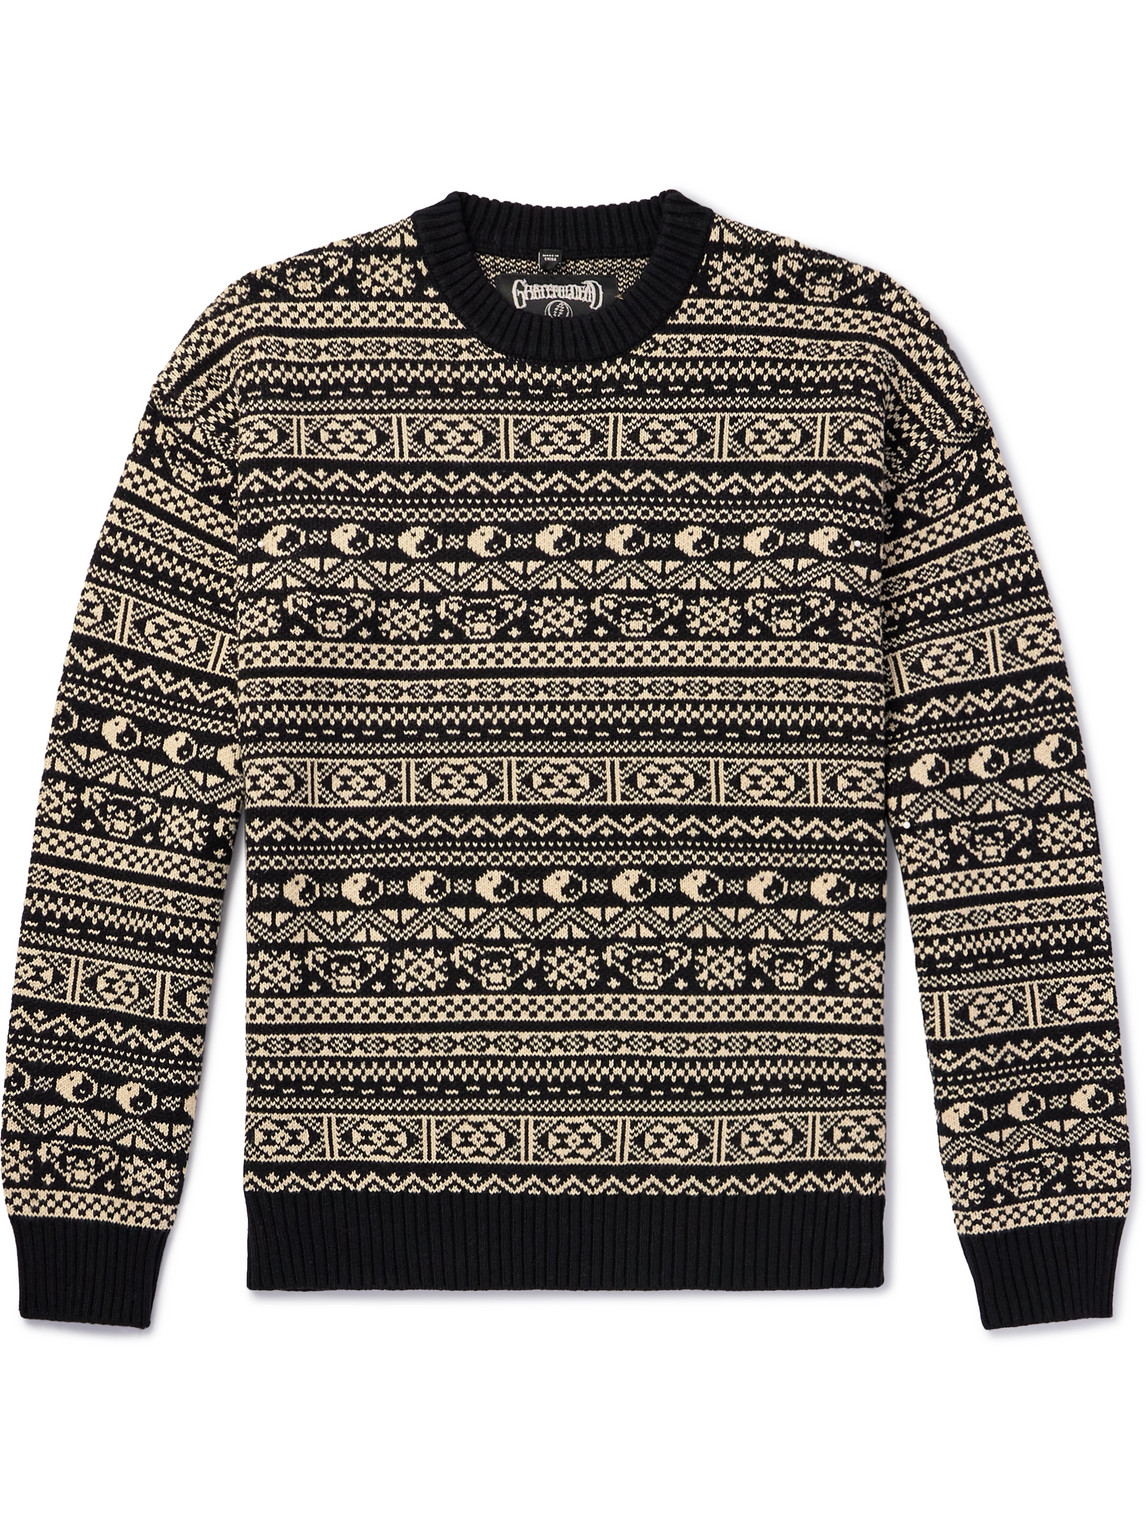 Grateful Dead Intarsia Cotton Sweater